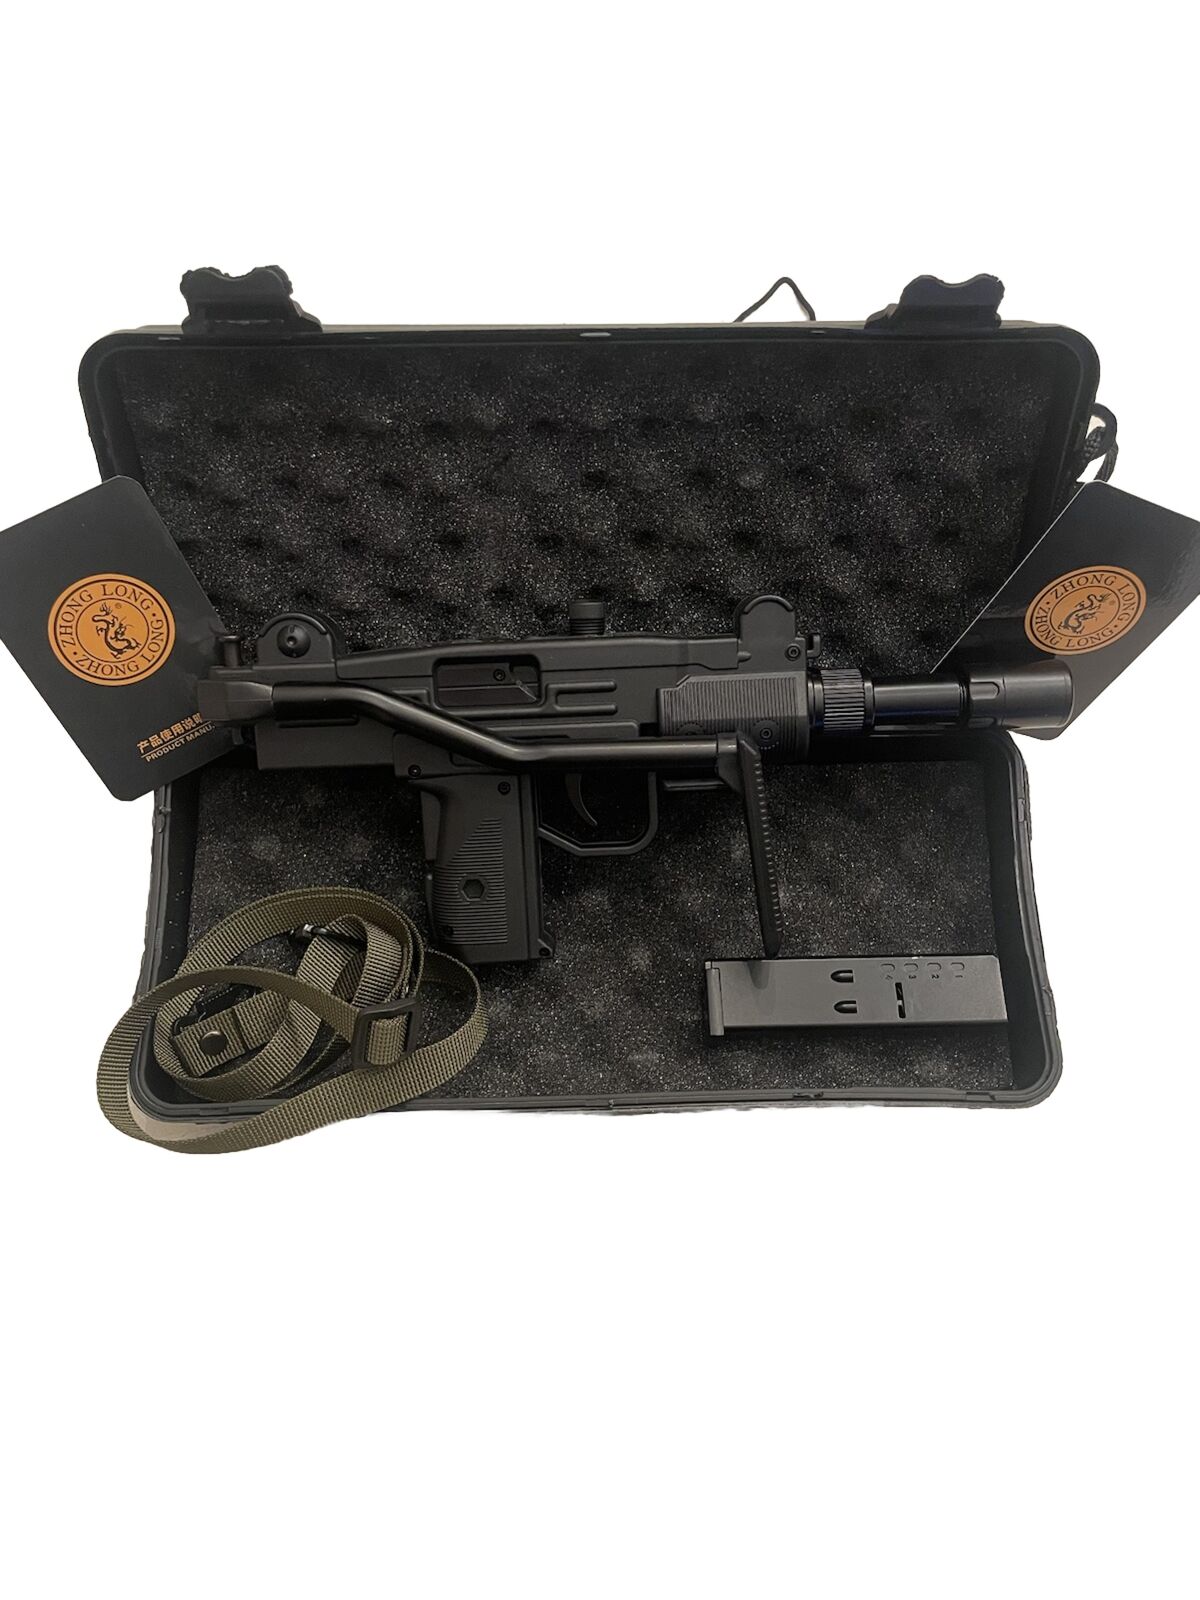 Uzi Shaped Gun Lighter METAL Fine Quality W/ Case & Barrel Attachment Black